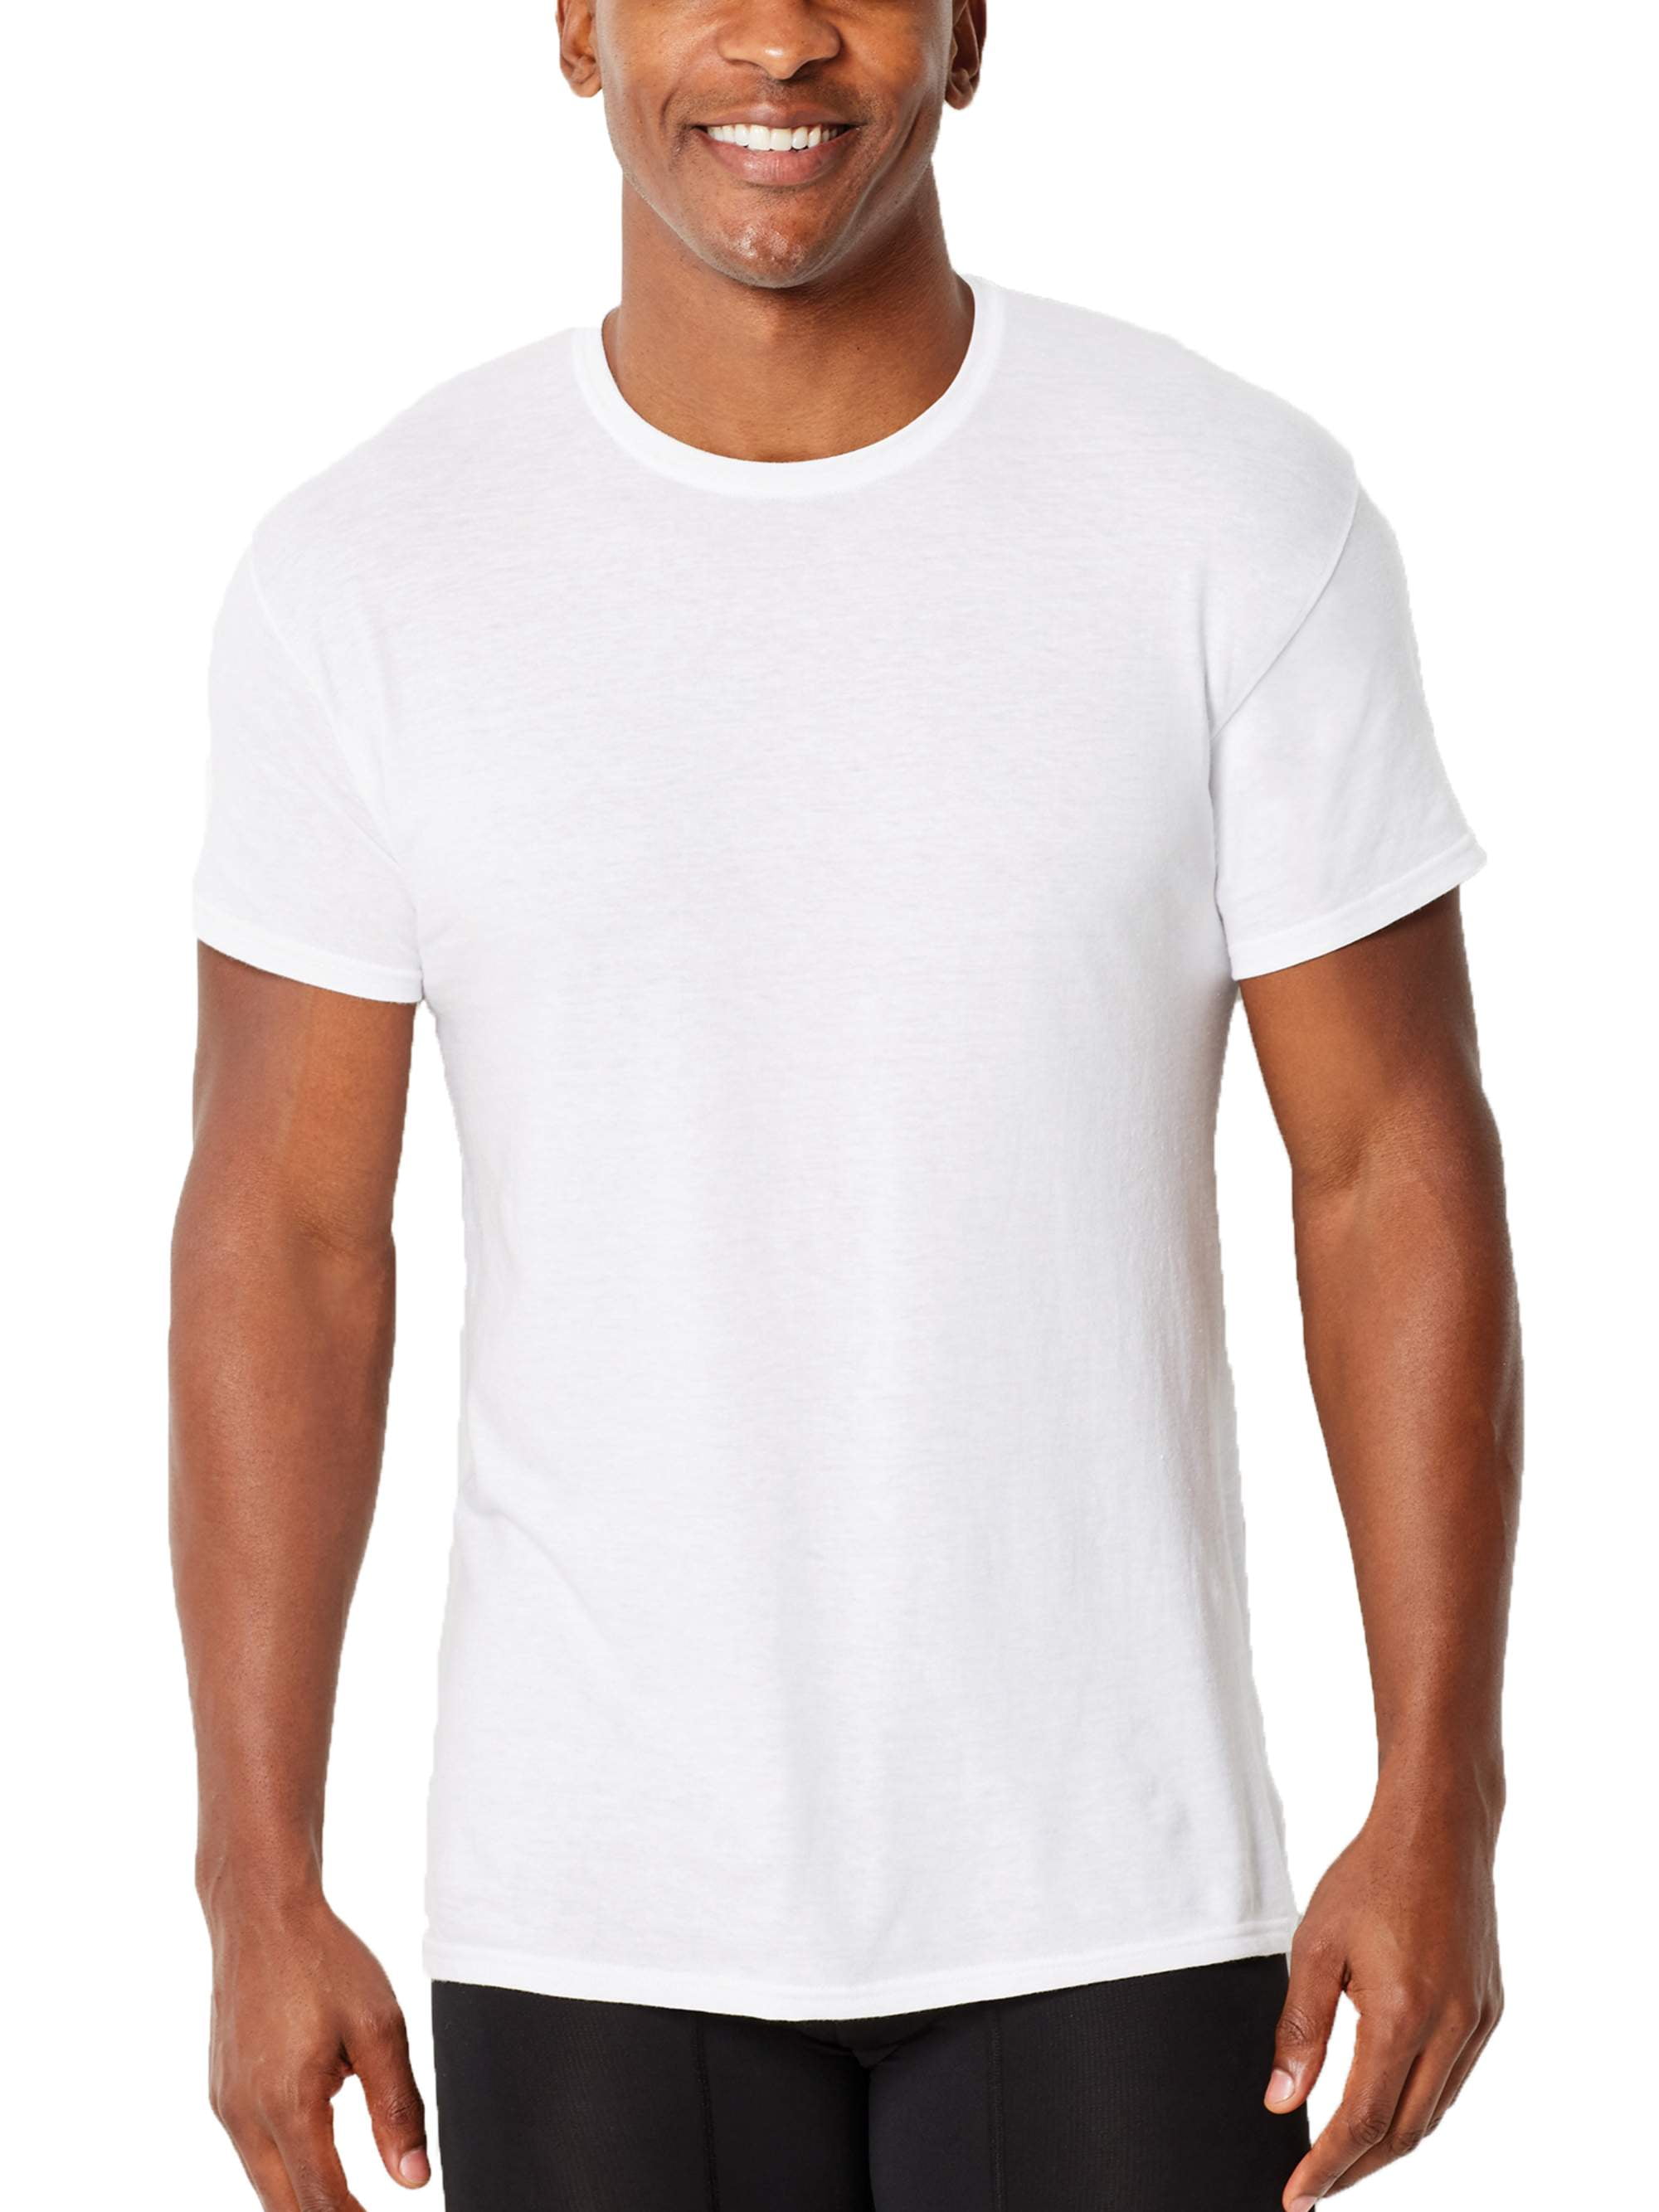 Mens ComfortFlex White Crew T-Shirt, 4 Pack - Walmart.com